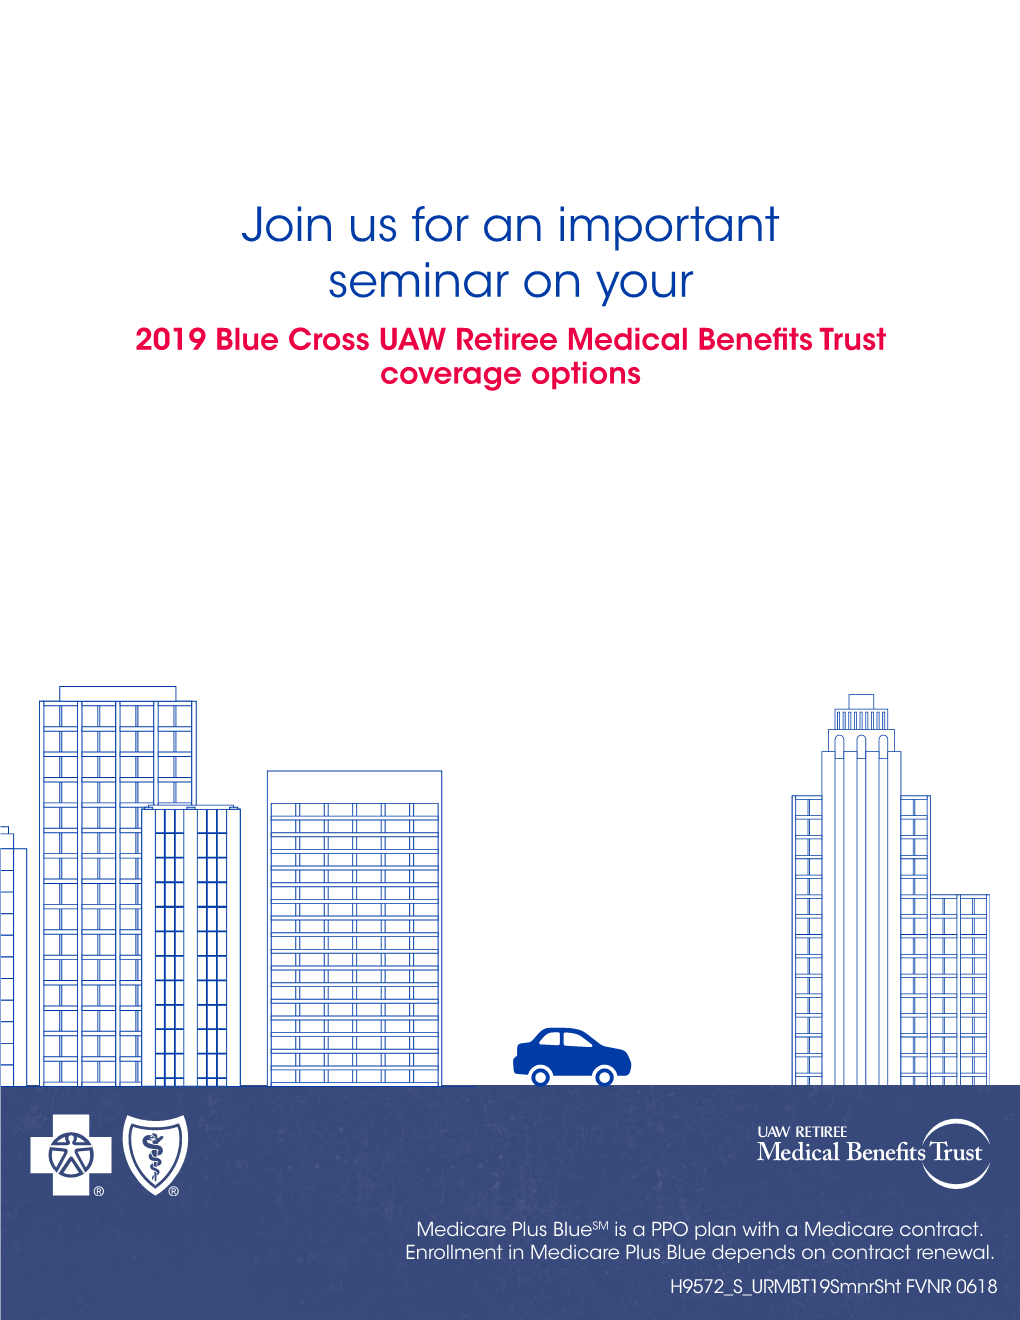 2019 Blue Cross UAW Retiree Medical Benefits Trust Coverage Options